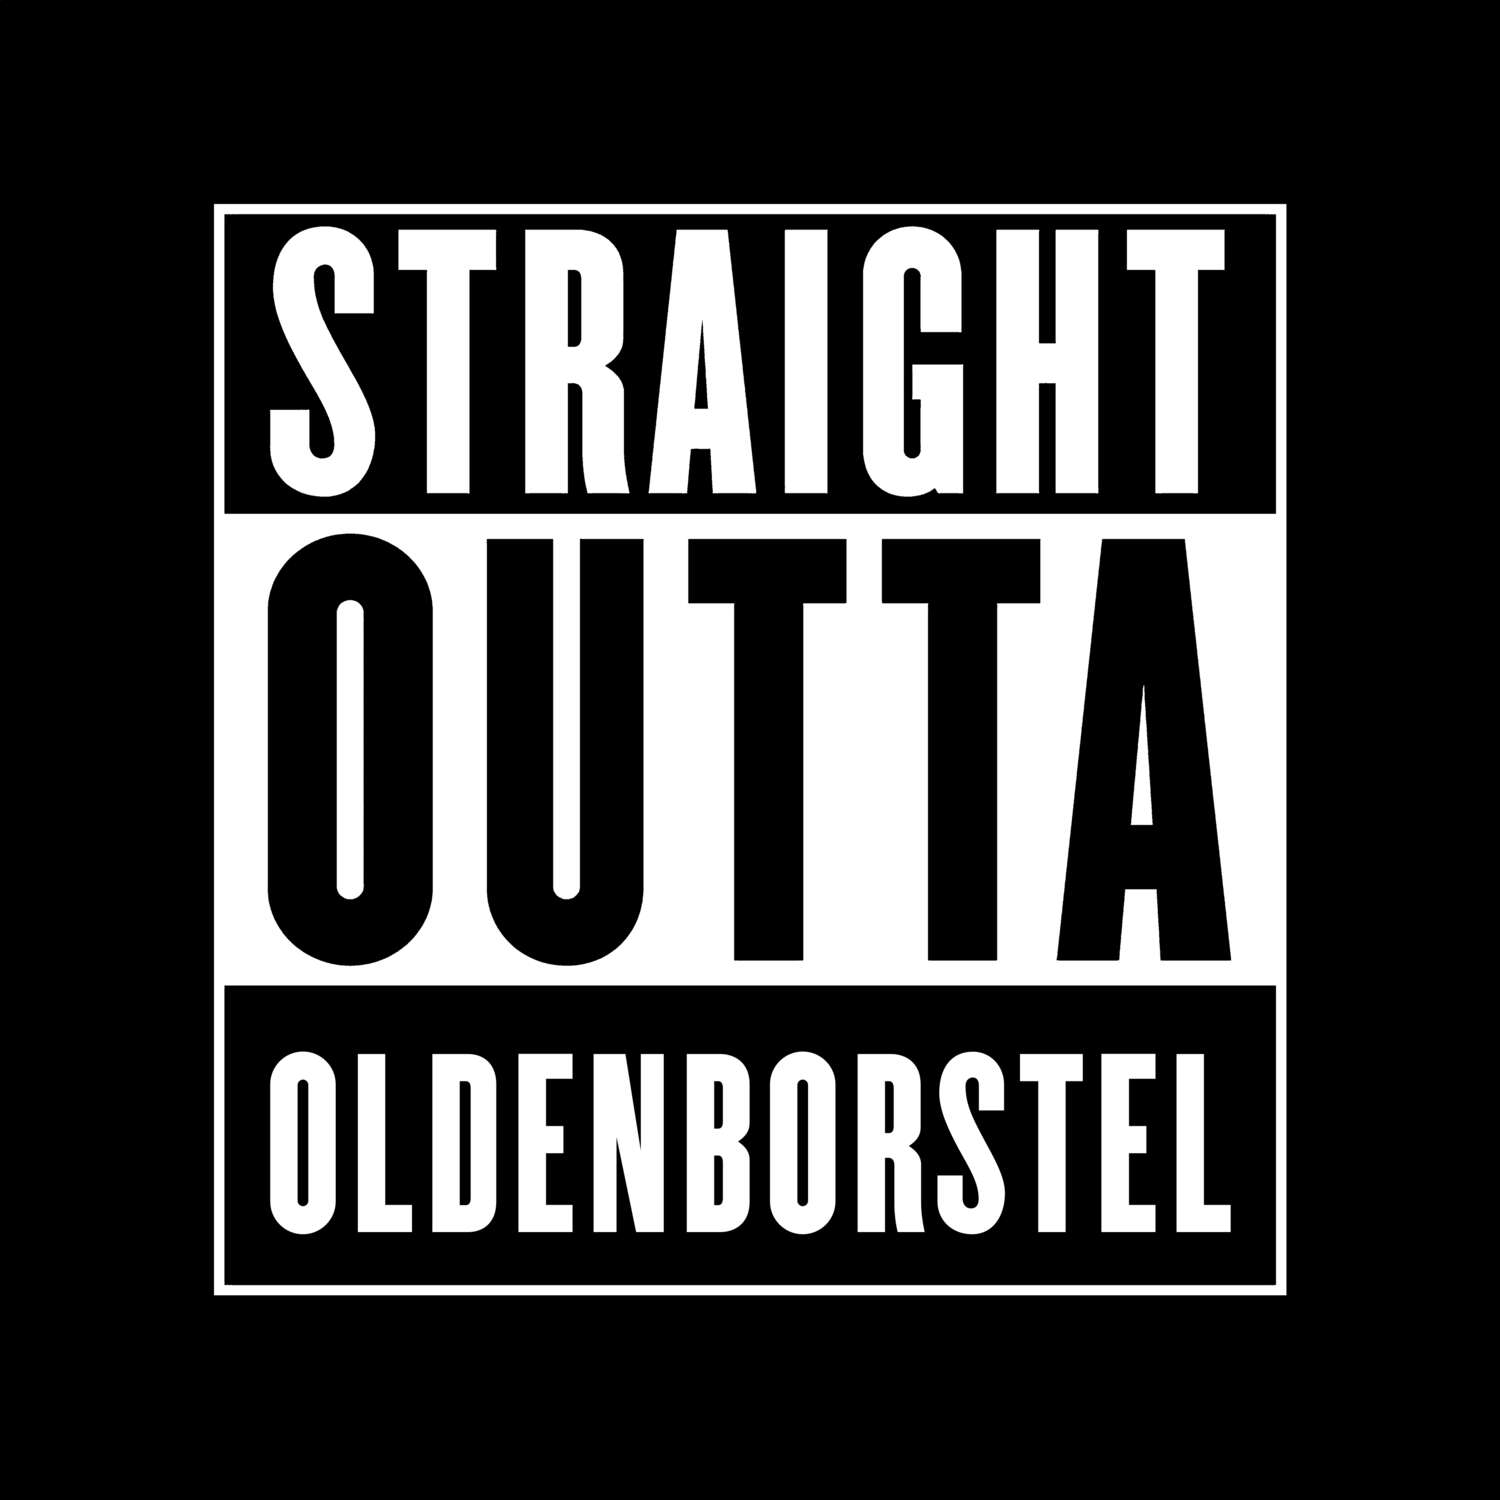 Oldenborstel T-Shirt »Straight Outta«